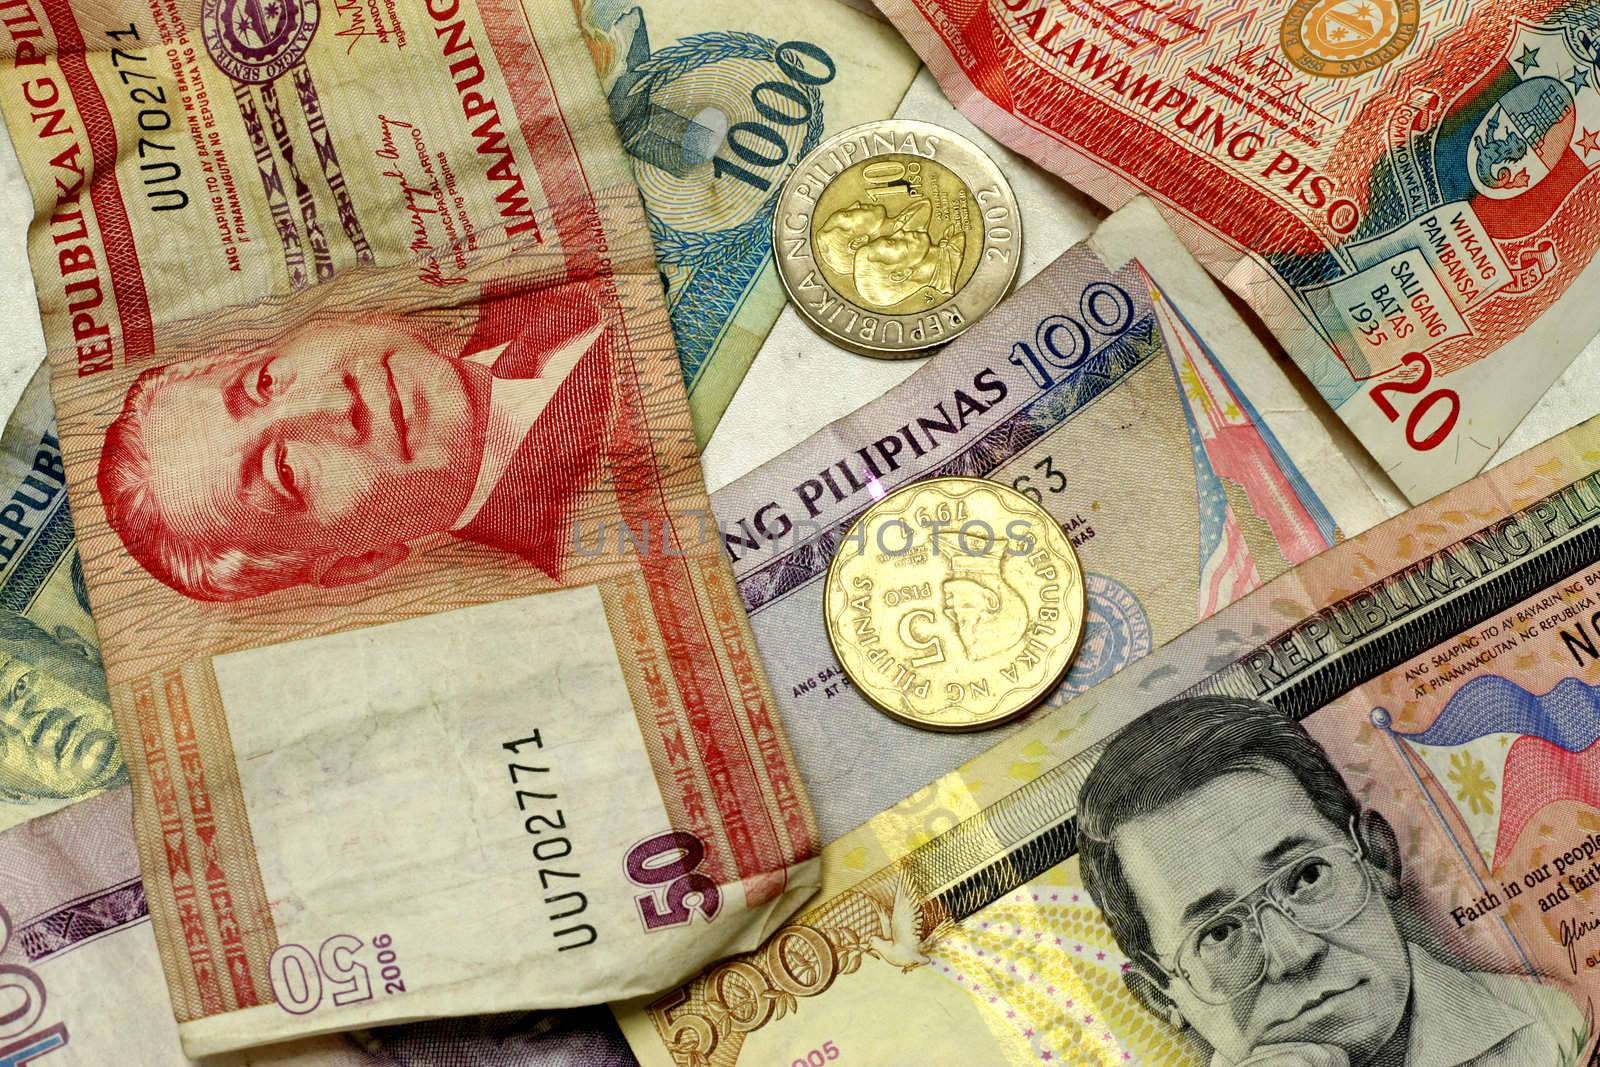 Philippine Peso denomination of 20,50,100,500 & 1000 with 5 & 10 peso coins